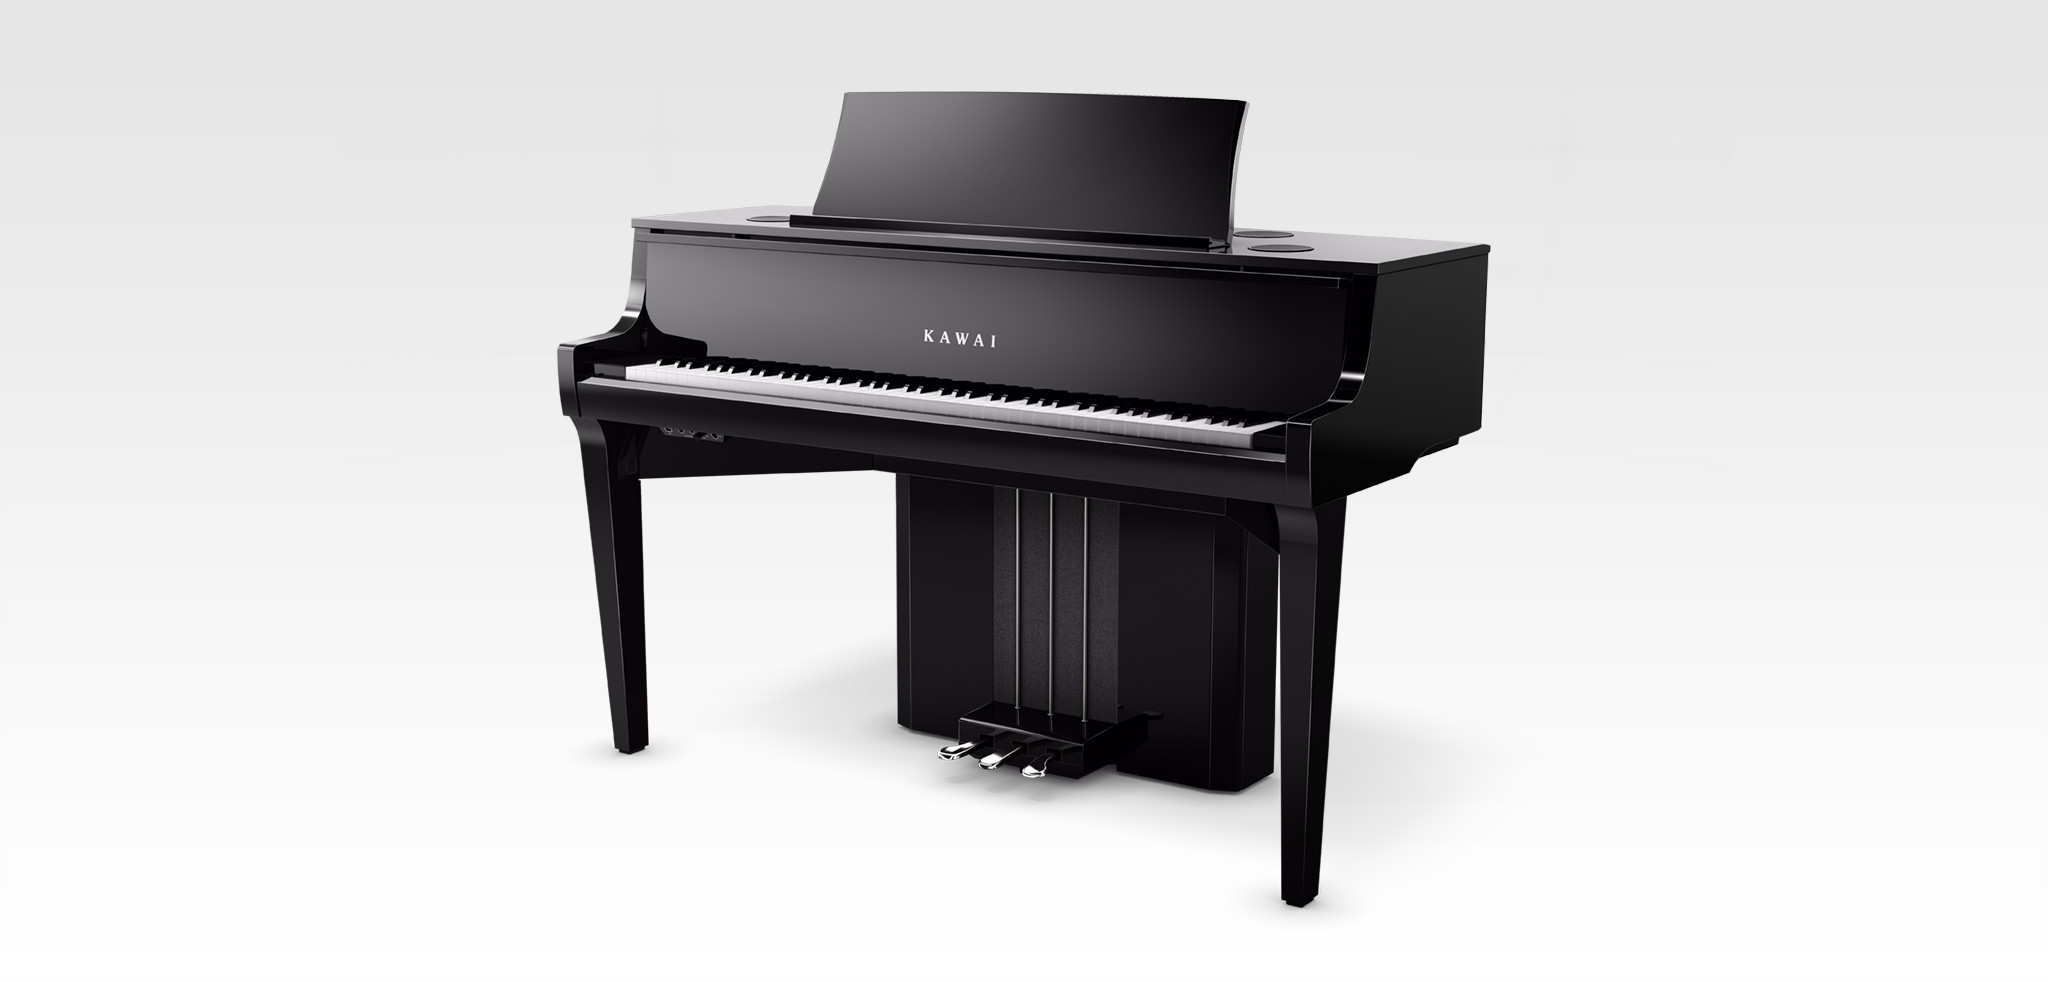 Best Price for Kawai Digital Pianos